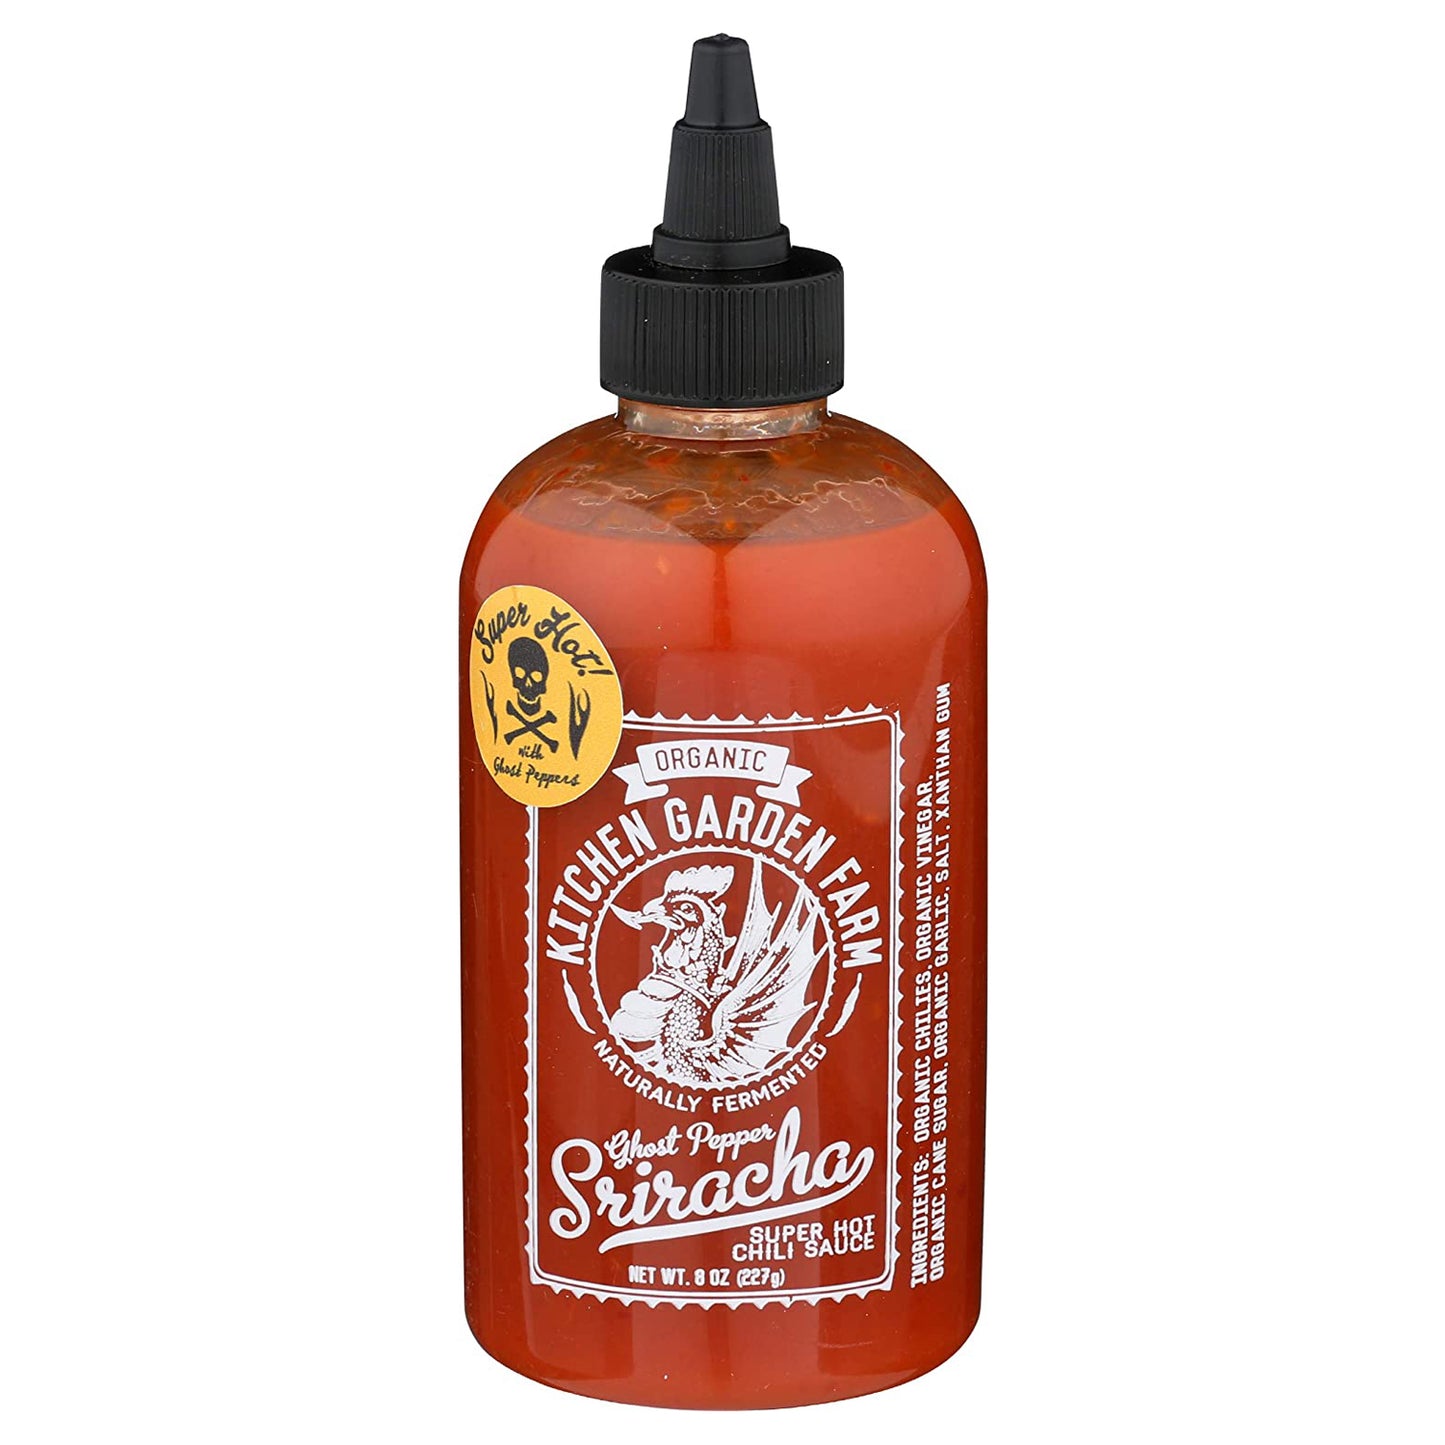 Ghost Pepper Sriracha Super Hot Chili Sauce